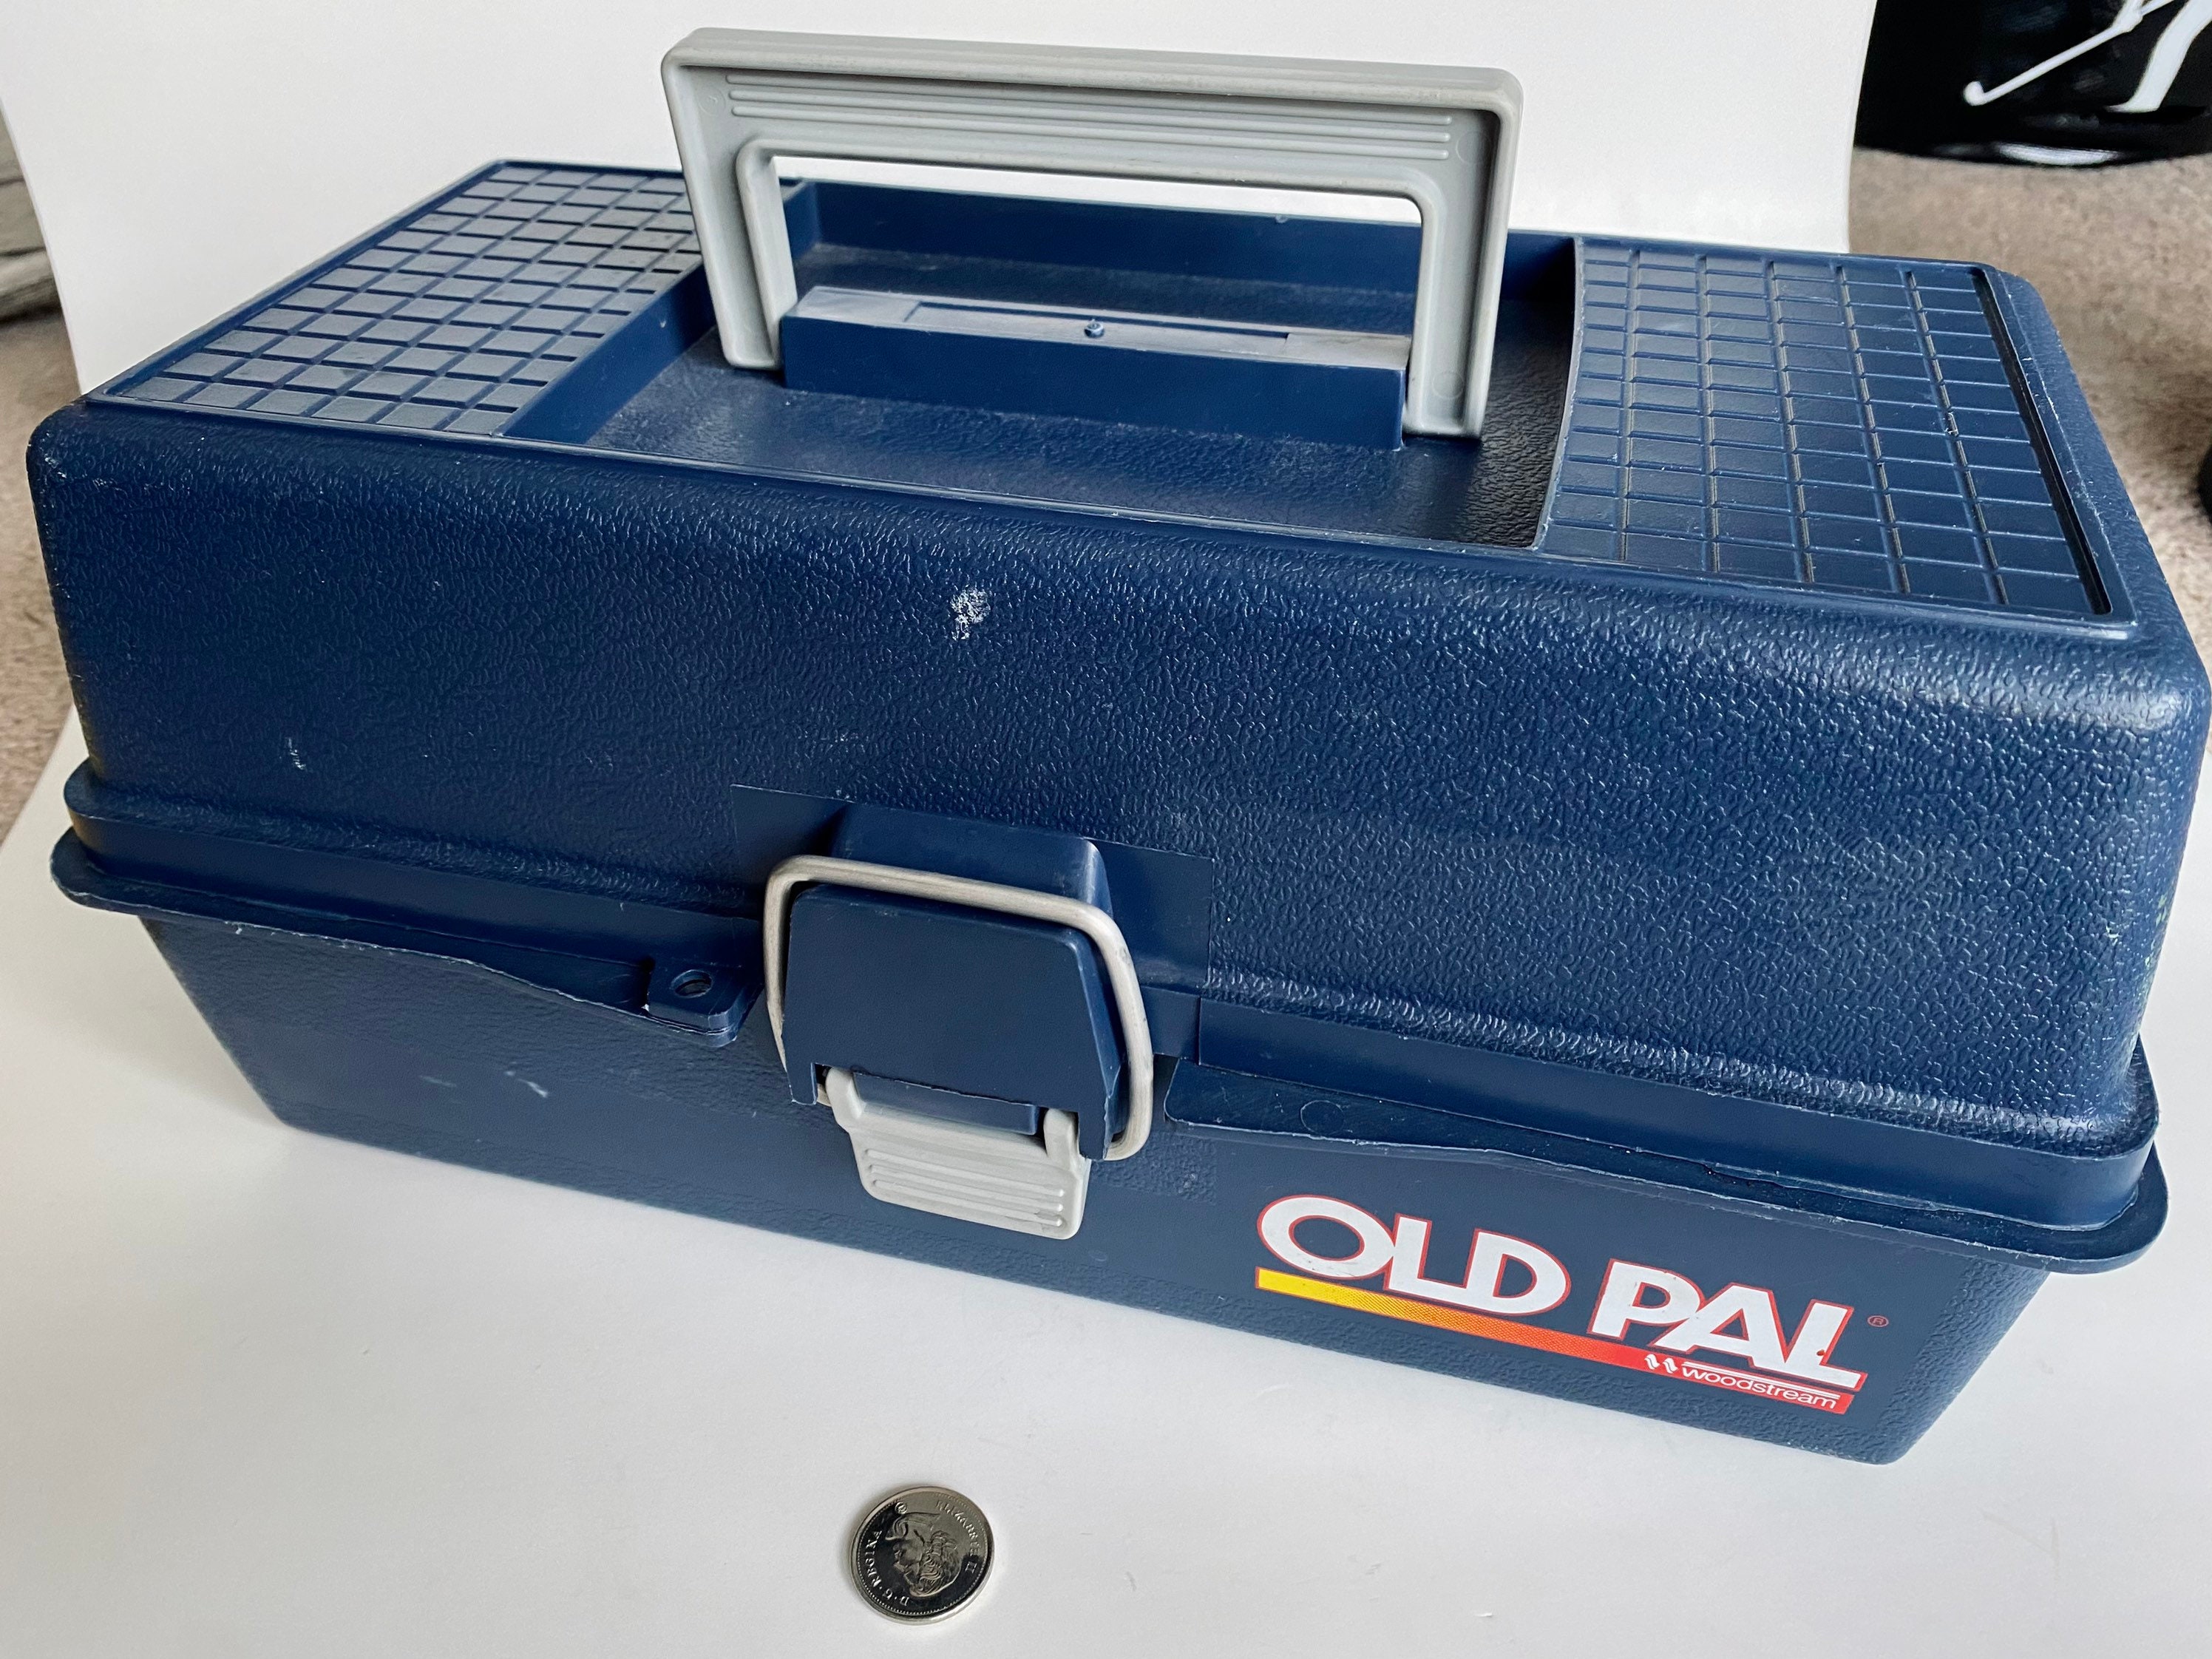 Vintage Tackle Box, Vintage Old Pal Box, Vintage Tool Box, Plastic Crafting  Storage Box, Fishing Tackle Box, Vintage Box, Fathers Day Gift -  India